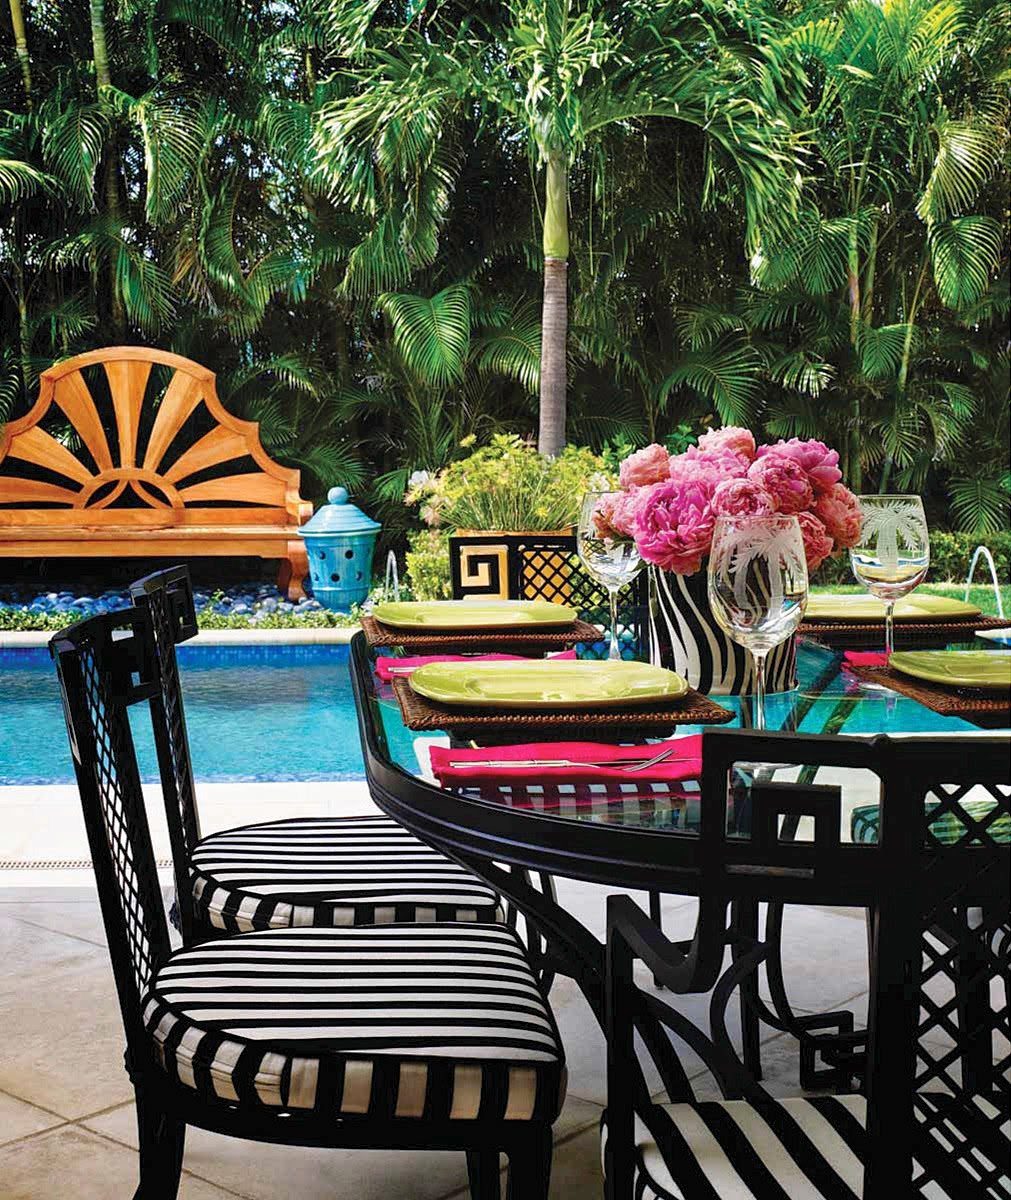 ALUMINUM PATIO GREEK Key Design Table Four Chairs Palm Beach Mid Century Retro Outdoor Living